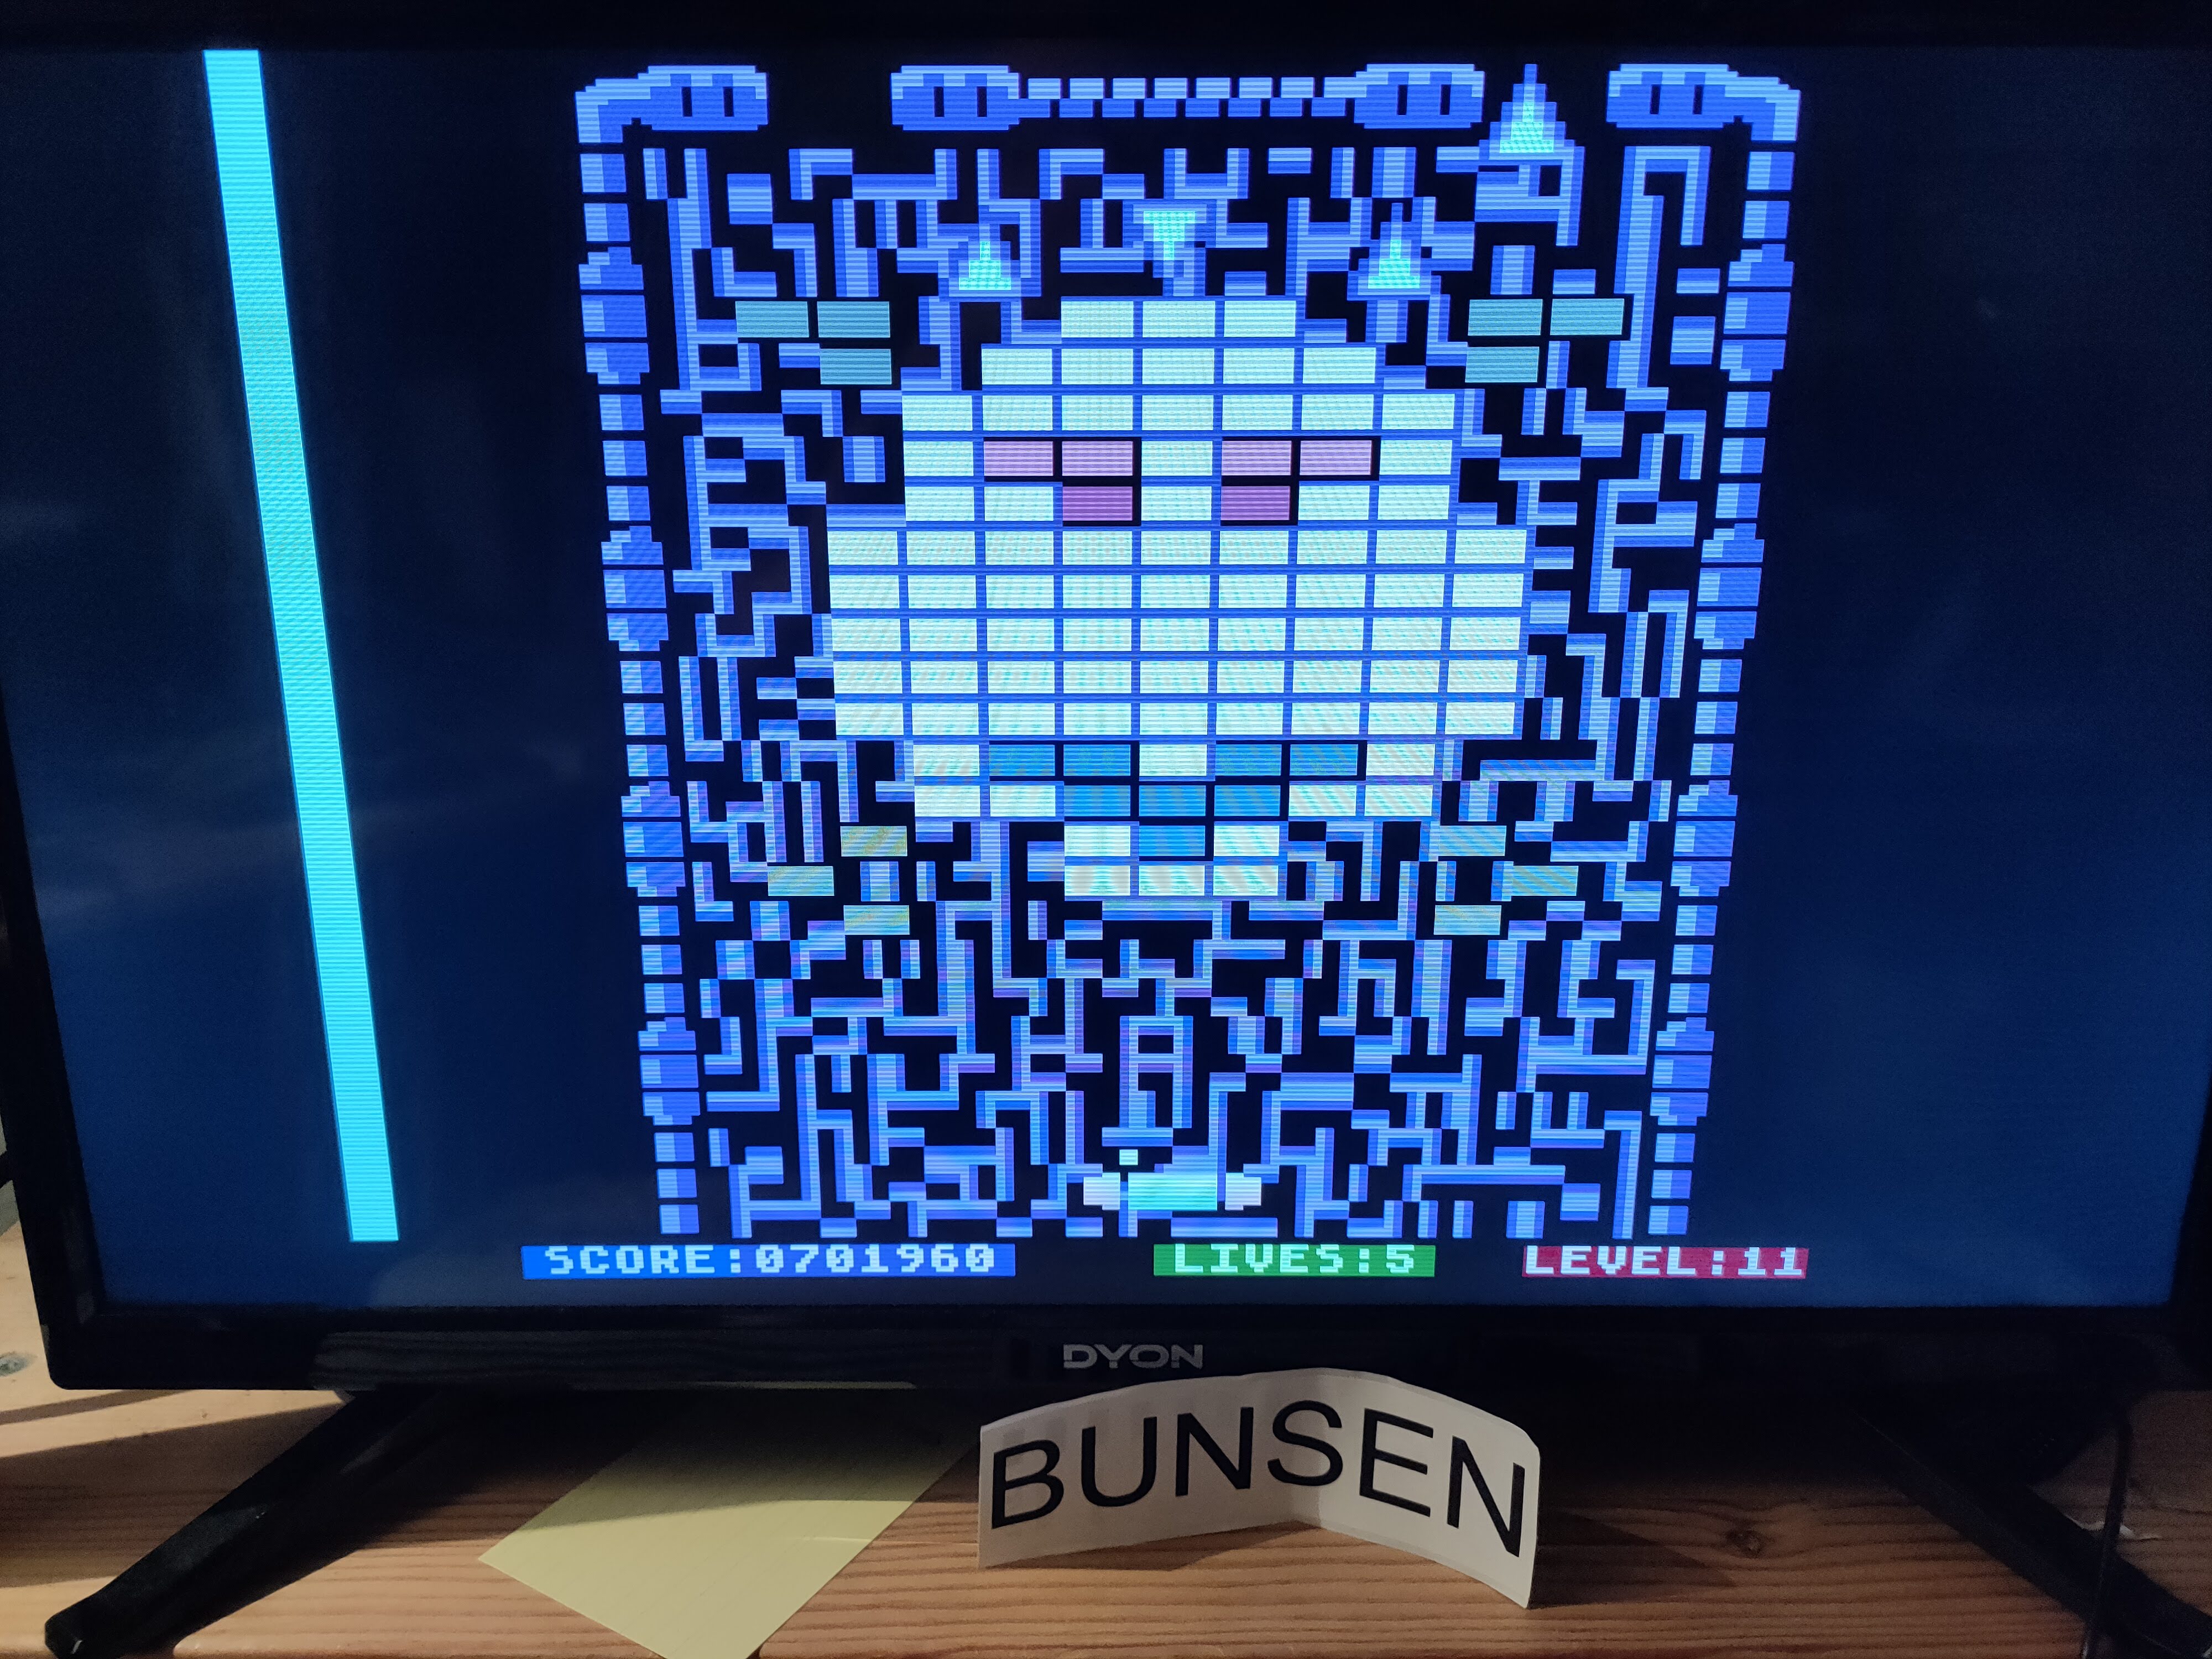 Bunsen: Break it! Reloaded 2022 (Atari 400/800/XL/XE Emulated) 701,906 points on 2022-11-23 12:39:36